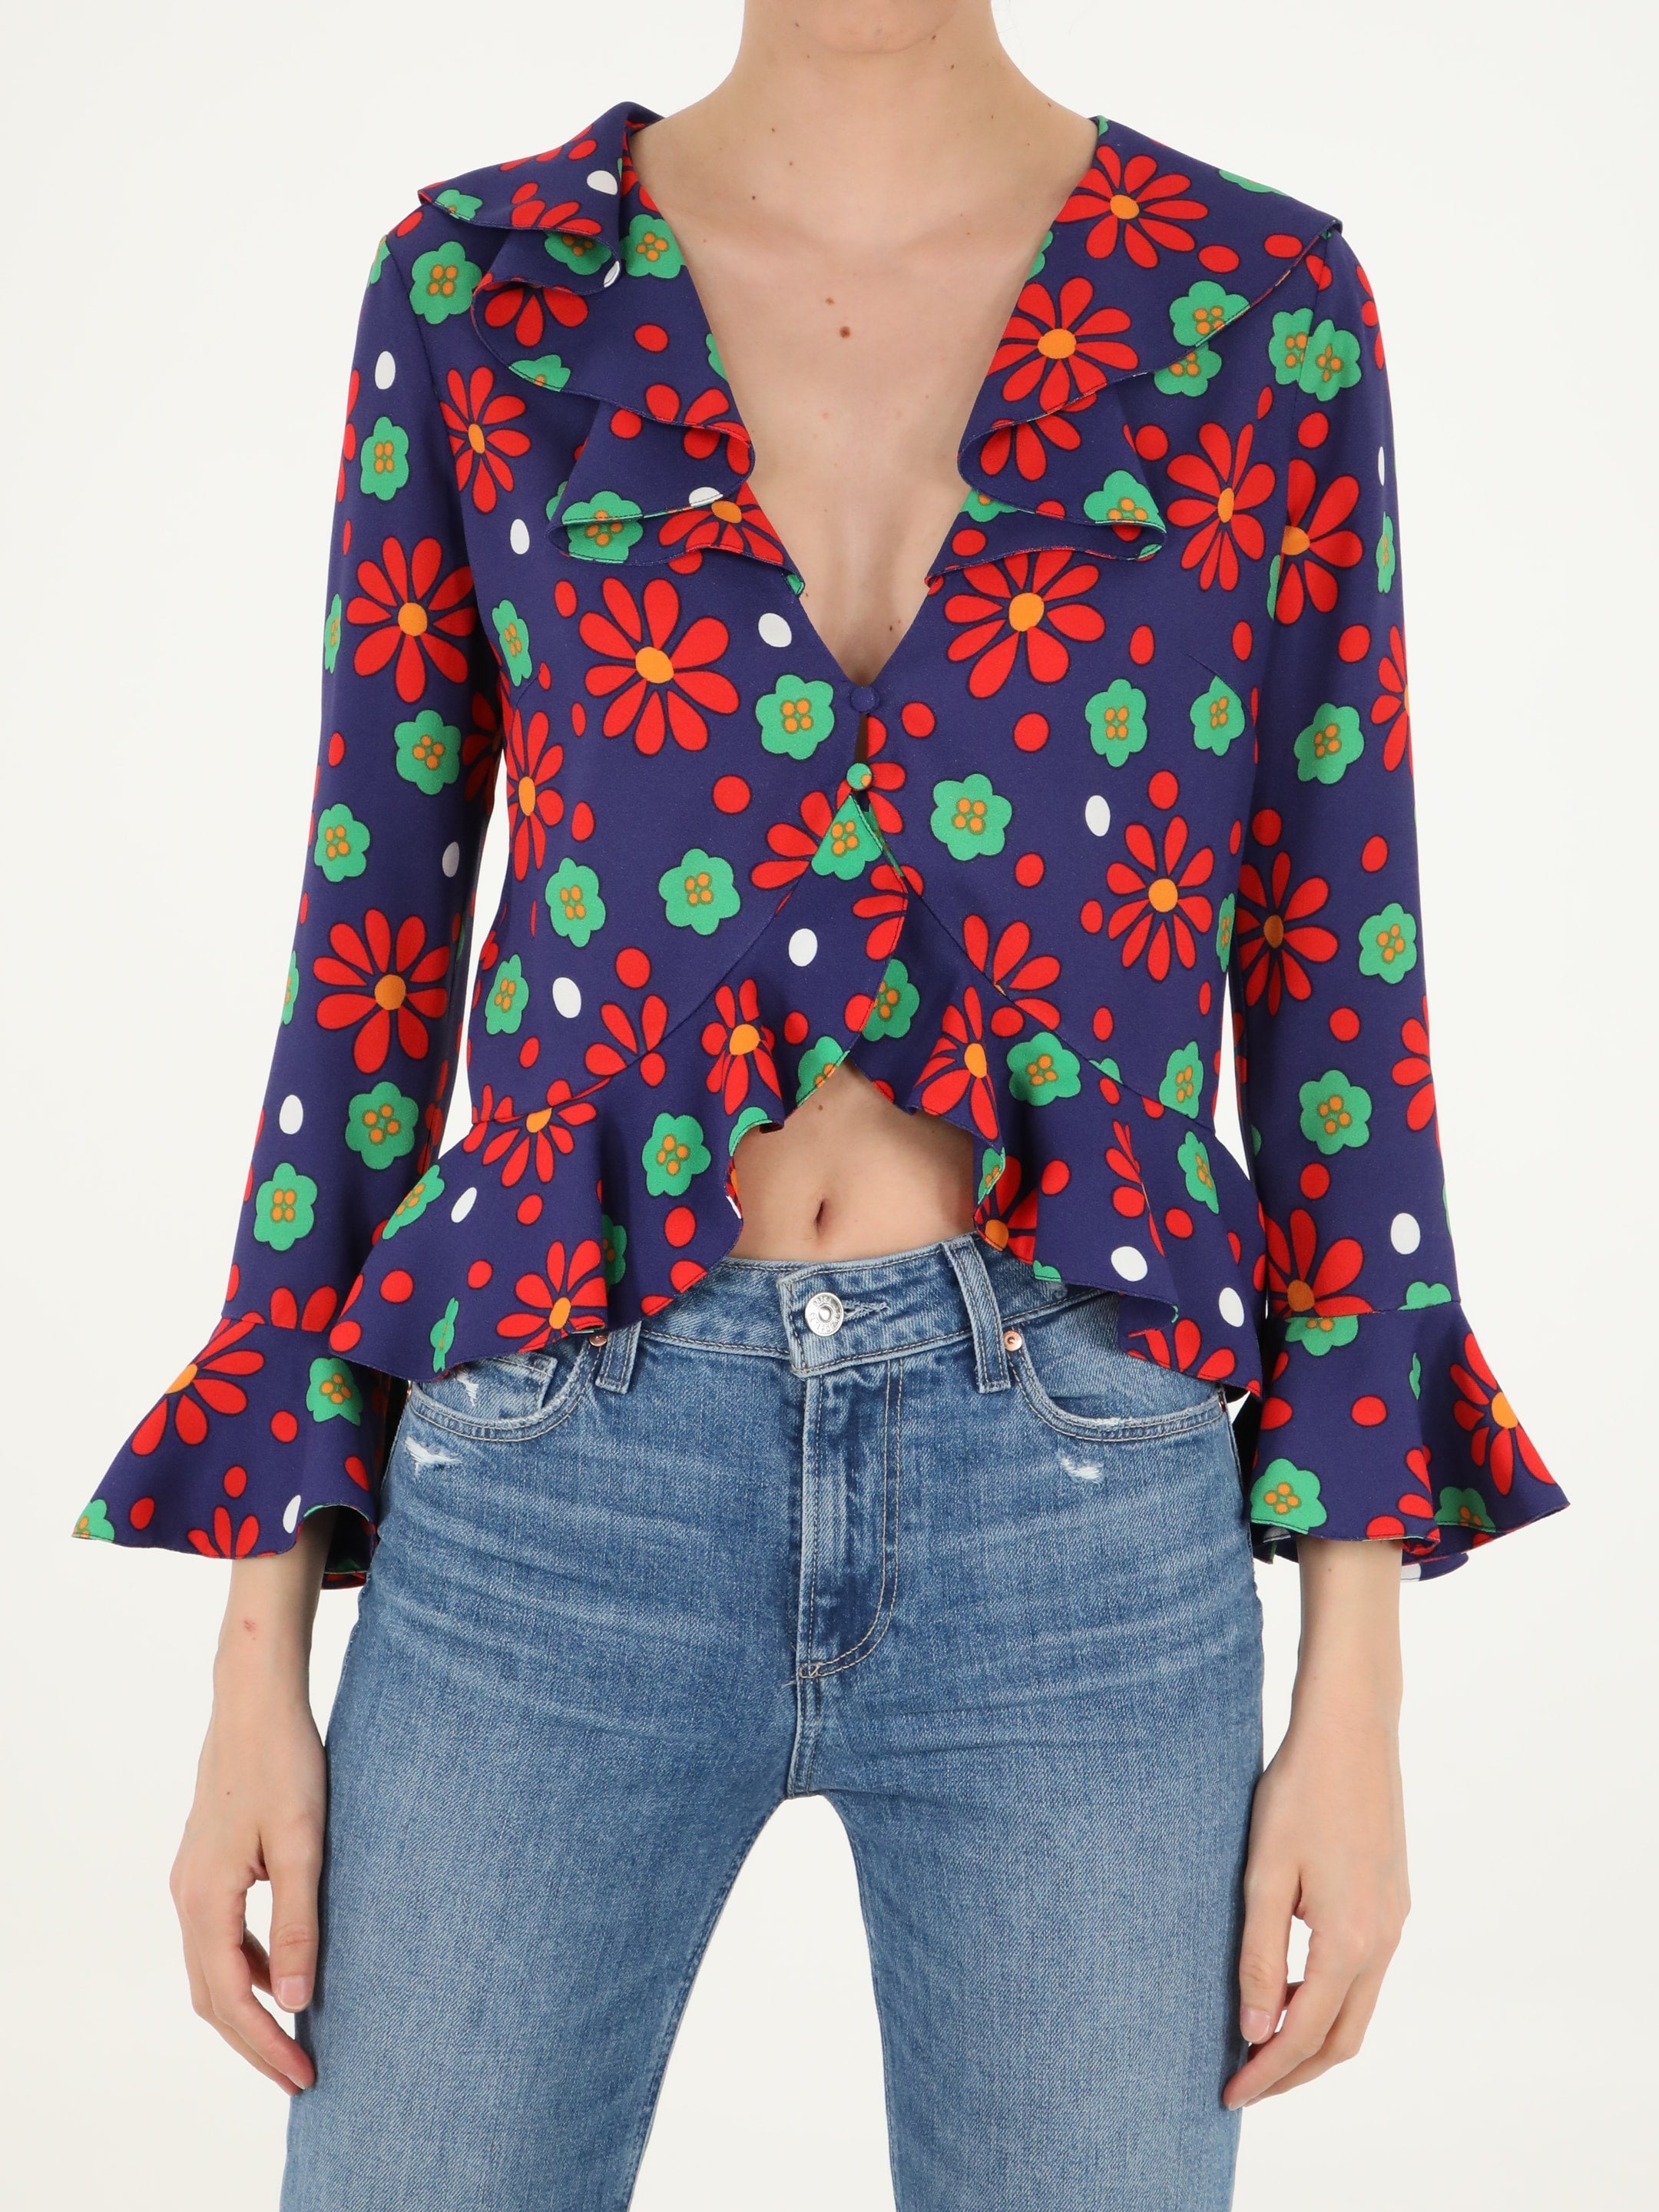 Ruffled multicolor blouse